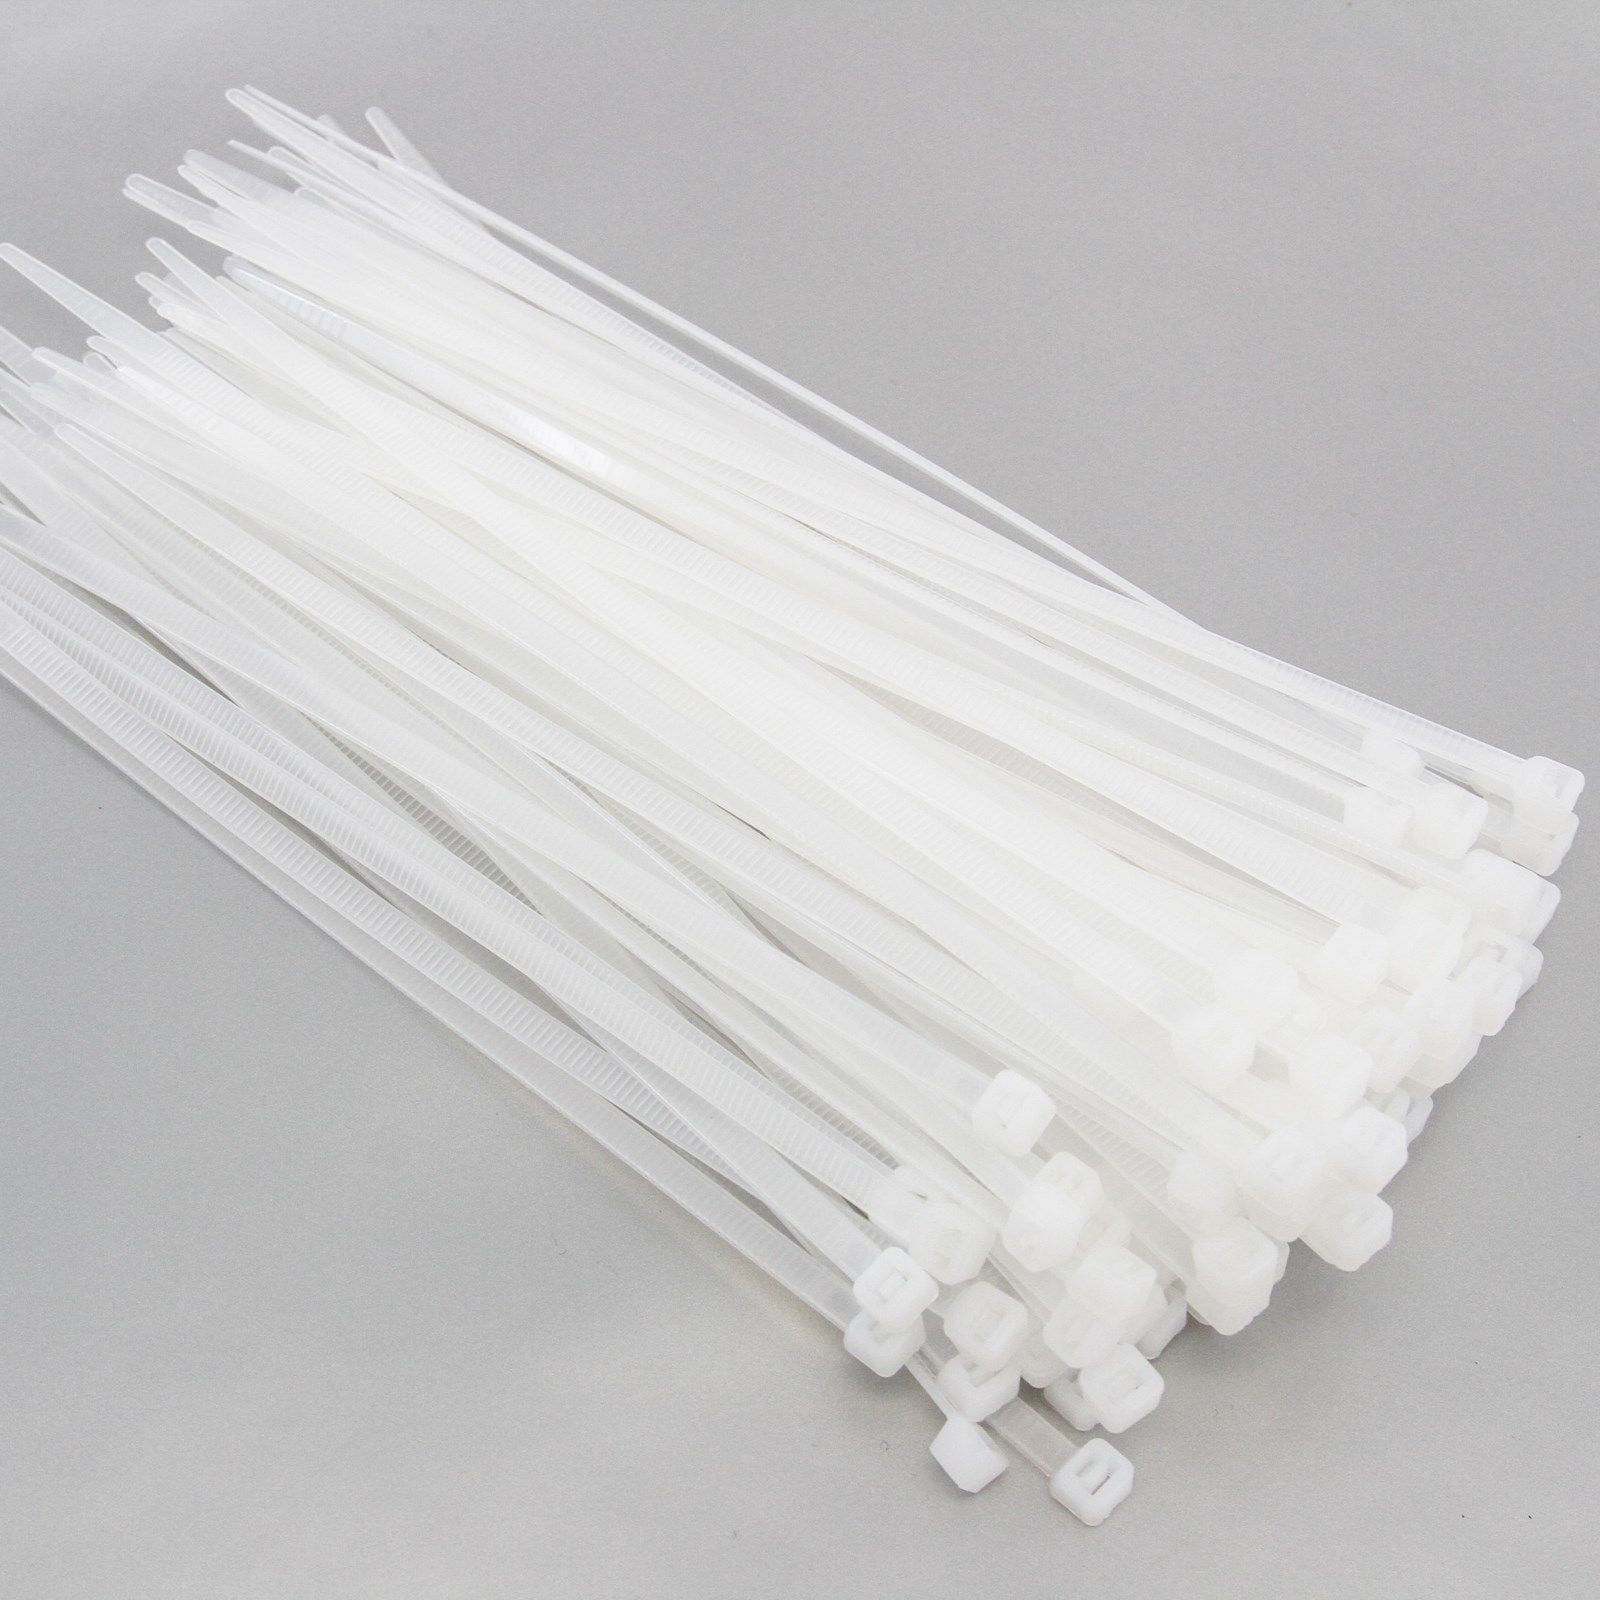 Assort Size Heavy Duty XL Nylon White Zip Tie Down Set Plastic Cable Wire Strap 